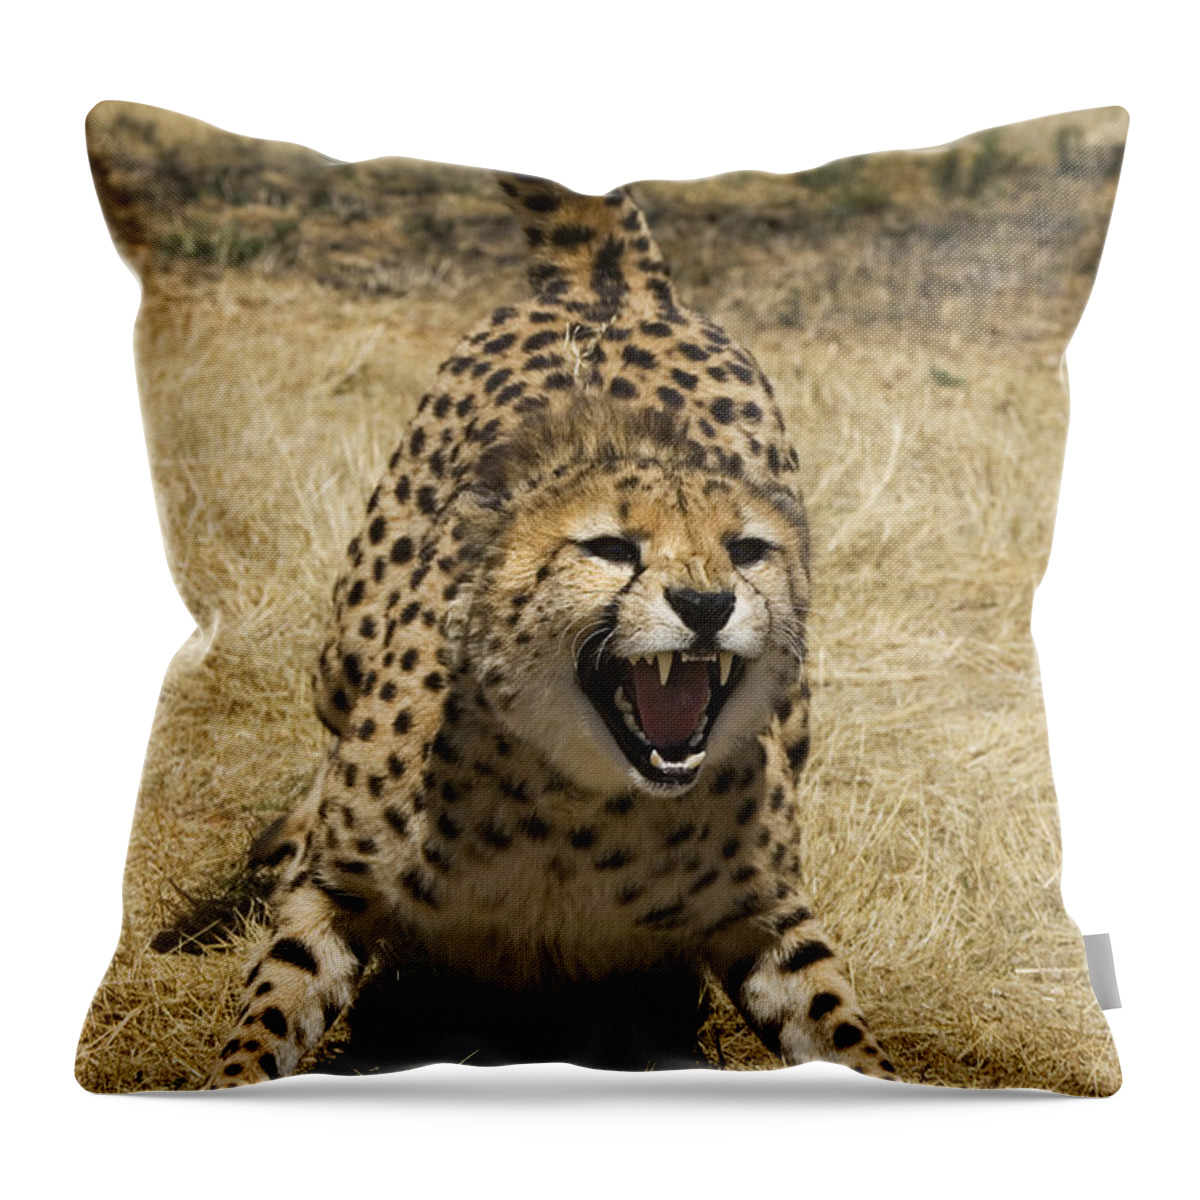 00761553 Throw Pillow featuring the photograph Cheetah Hissing by Suzi Eszterhas